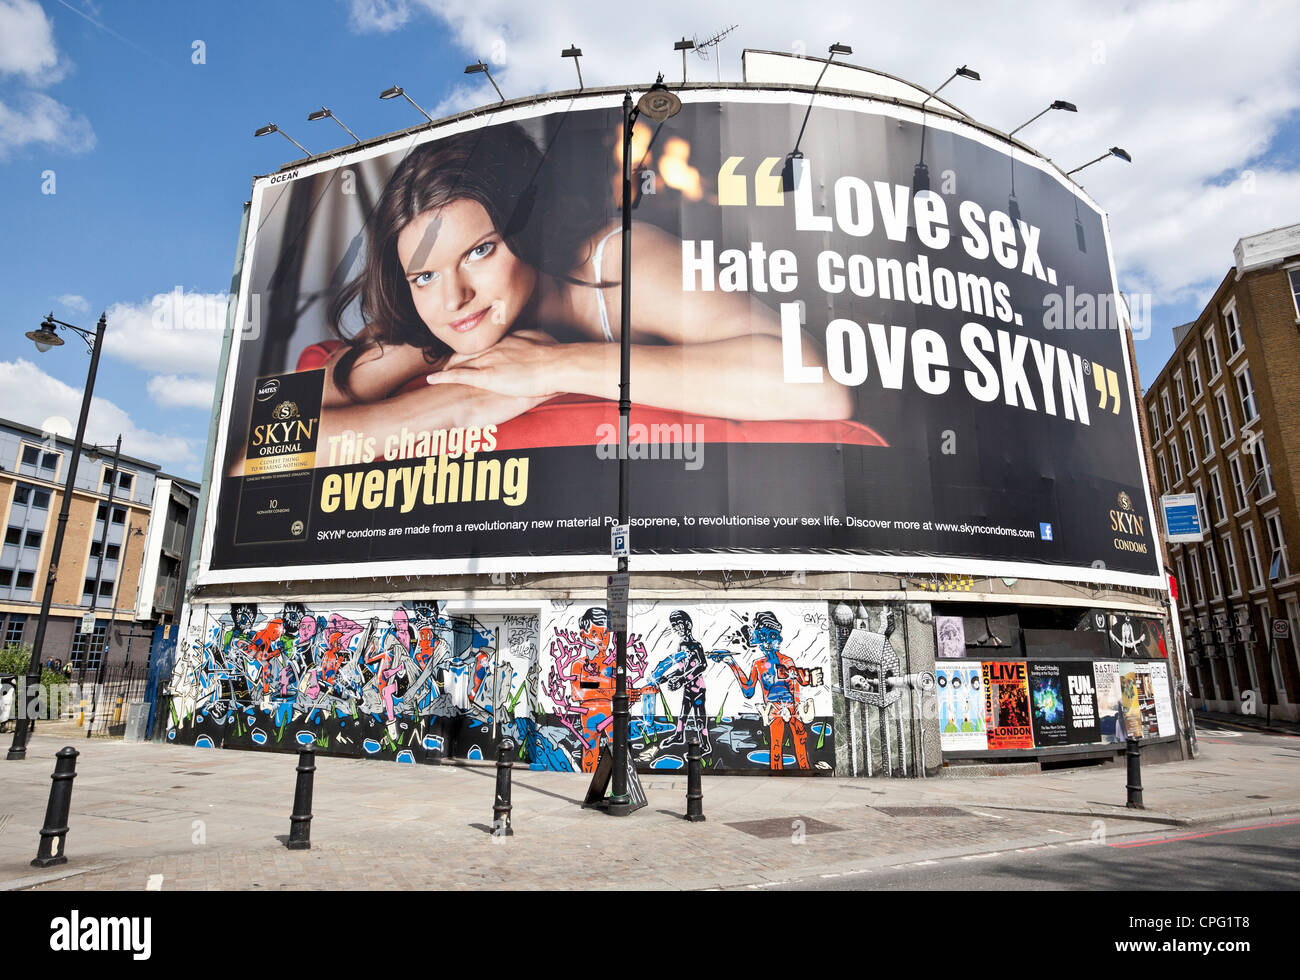 Giant billboard advertising condoms, Old Street, Shoreditch, London, England, UK Stock Photo